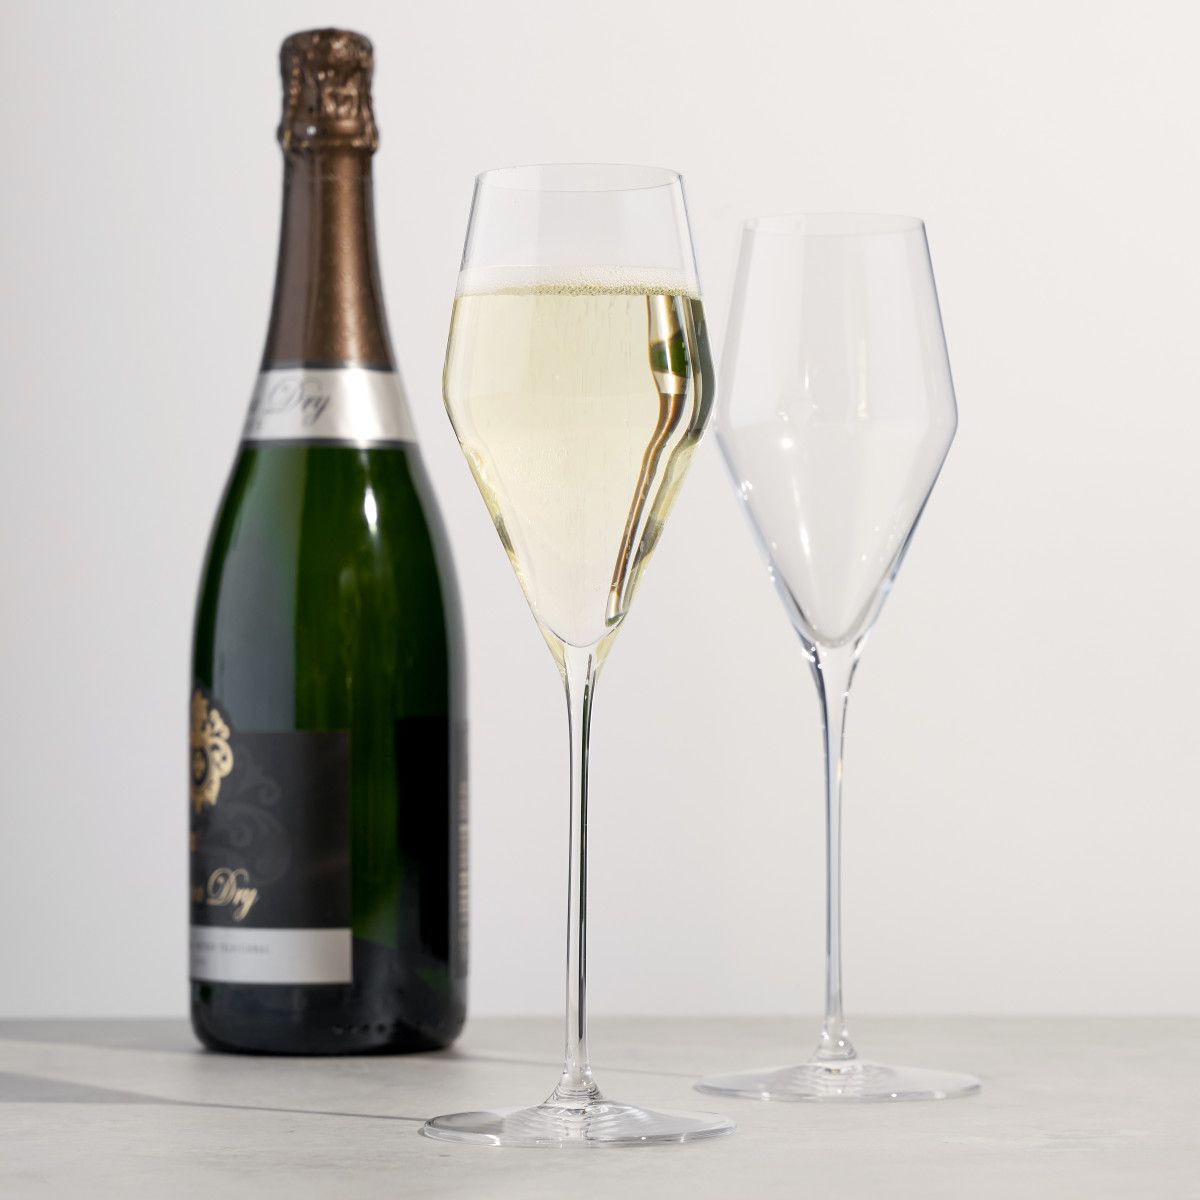 Spiegelau Spiegelau Definition Champagne Glass, 9 oz, Set of 2 - lily & onyx